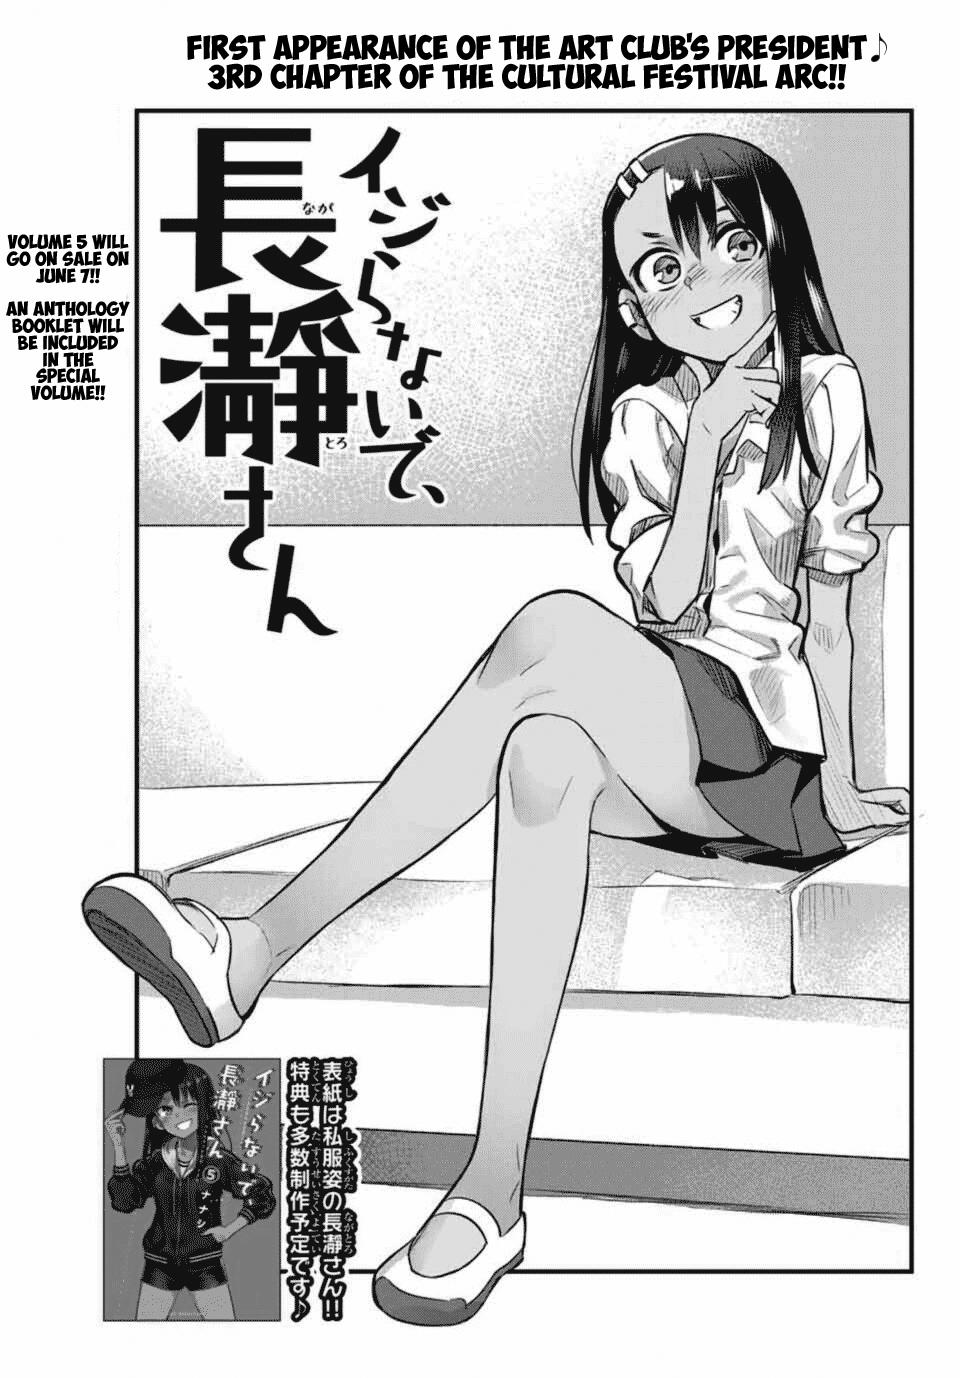 10 Manga Like Ijiranaide, Nagatoro-san: Comic Anthology